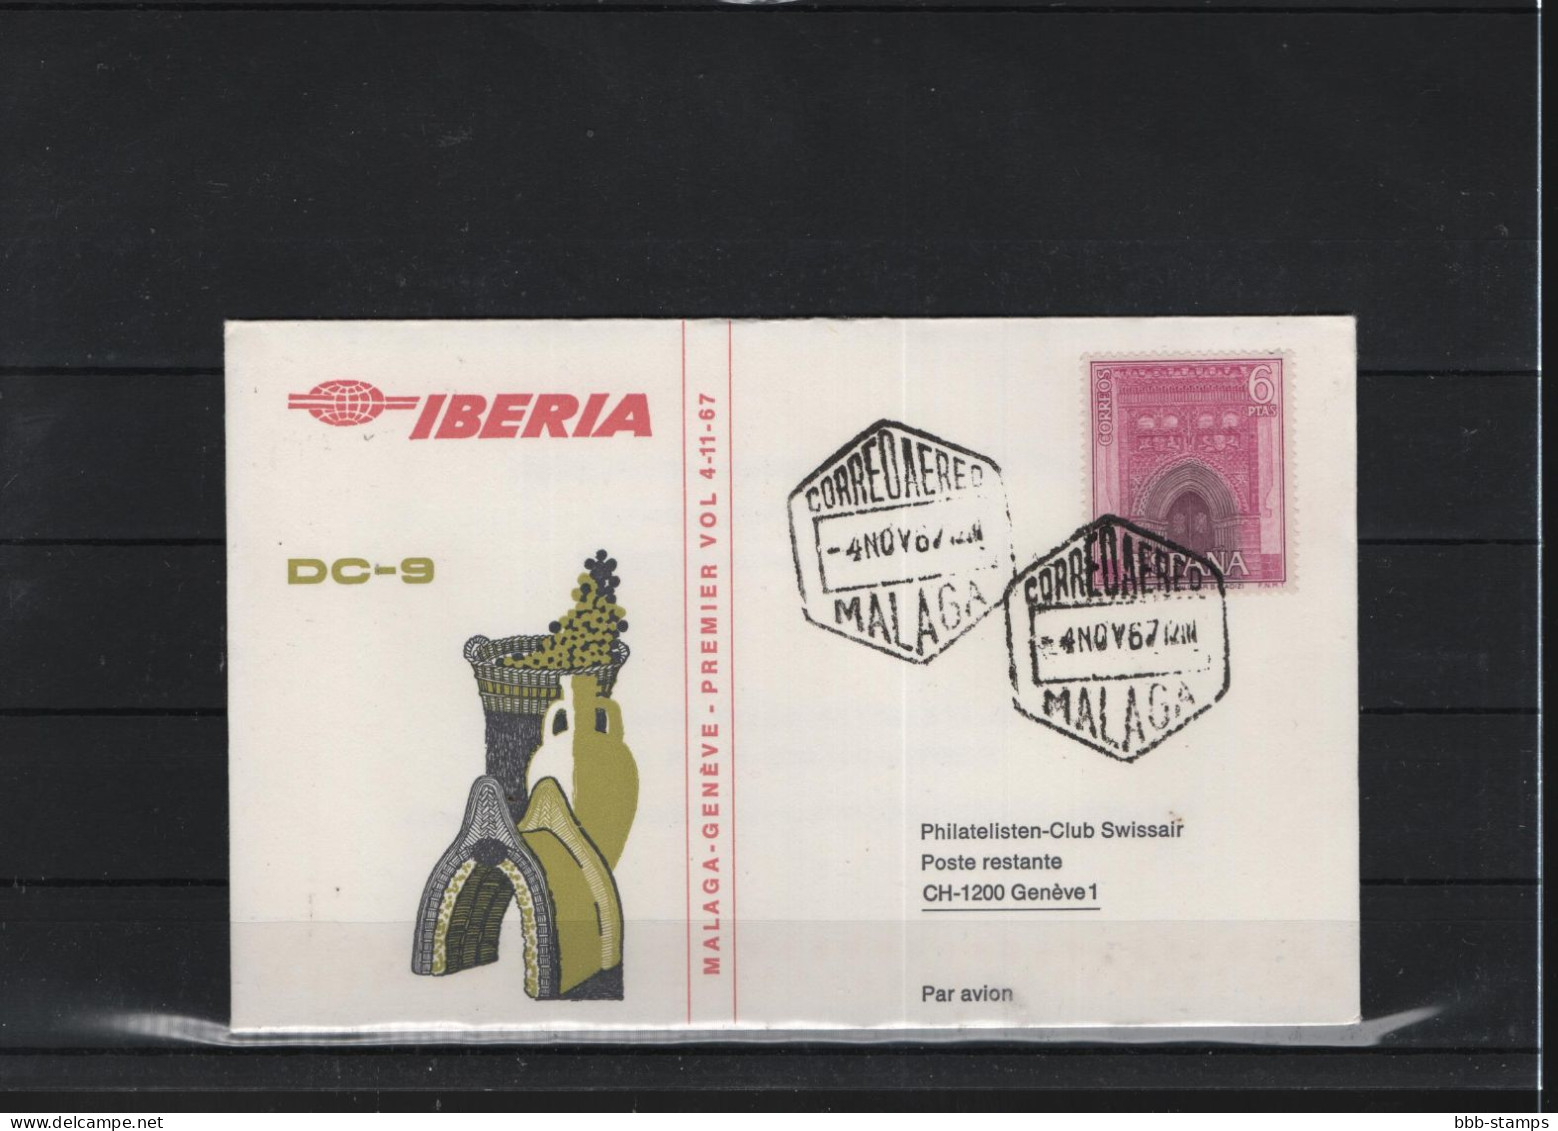 Schweiz Luftpost FFC Iberia 2.4.1968 Gebf - Malaga - Vv - Primi Voli